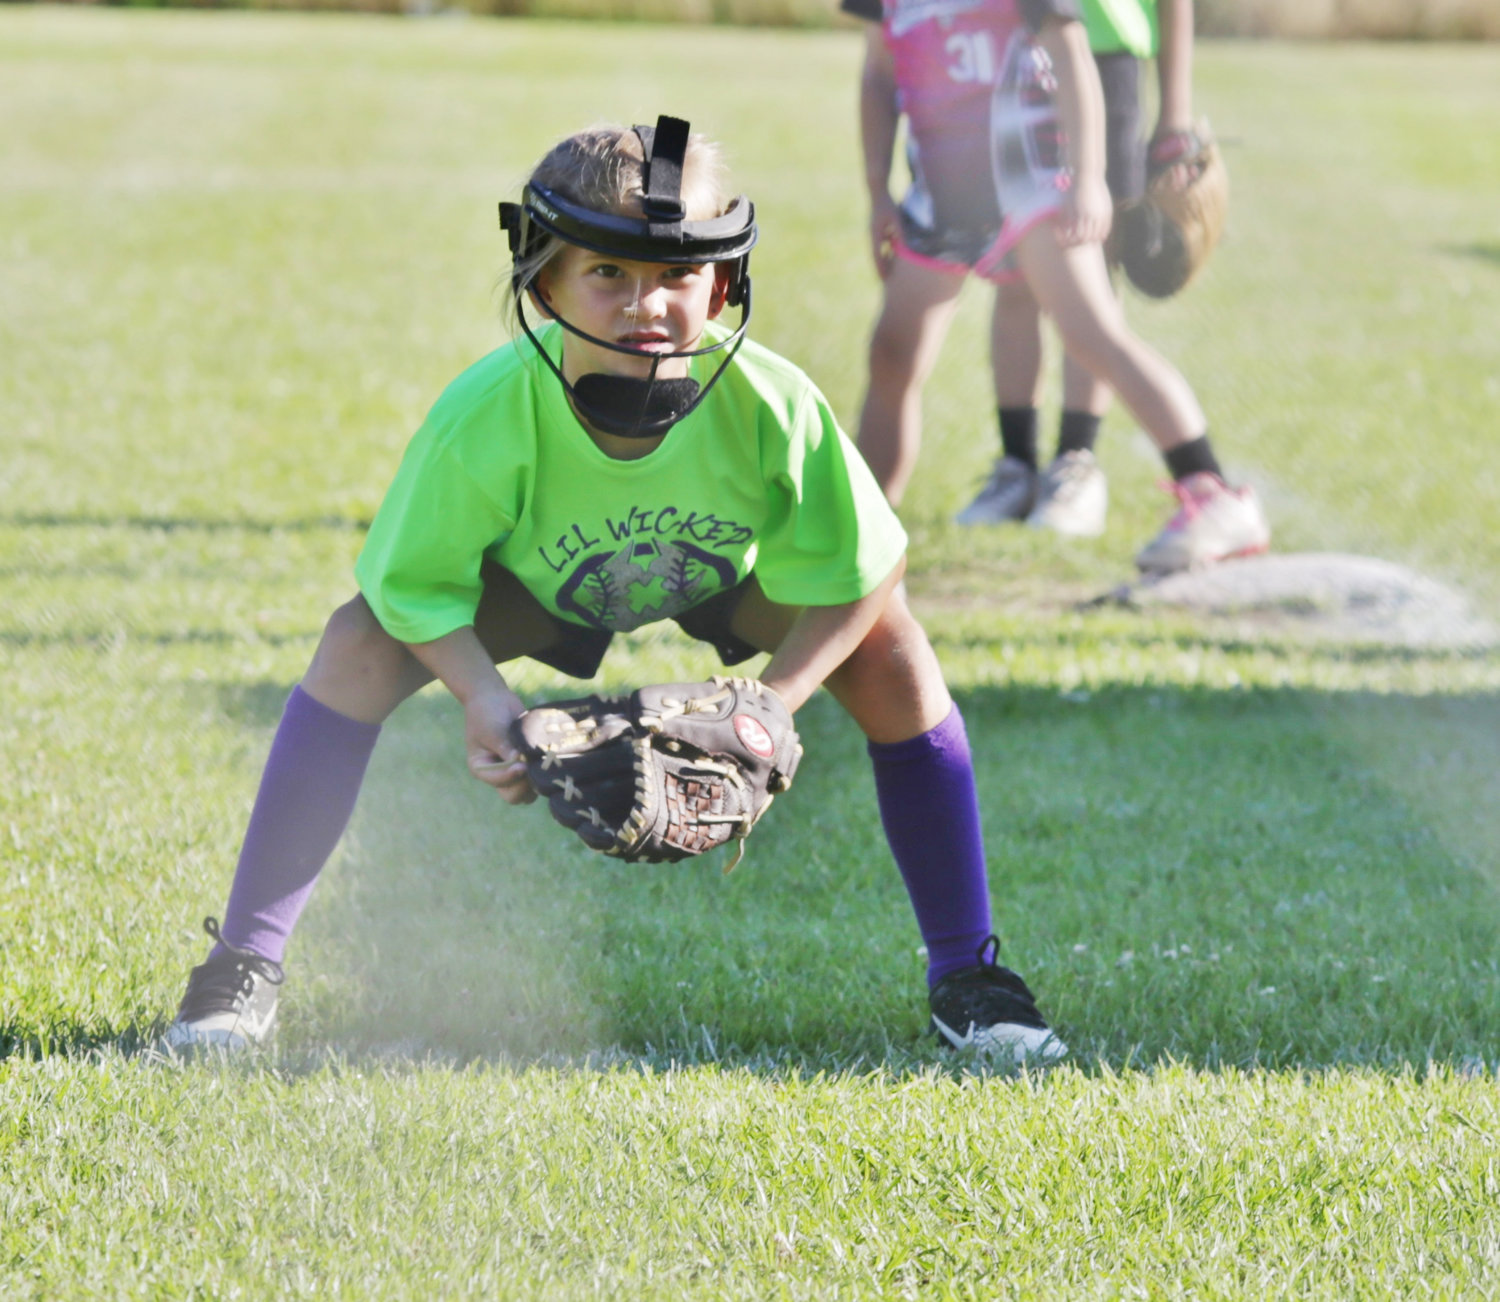 Layla Kurtz demonstrates the softball ready stance while fielding for Mineola’s Little Wicked teeball team.